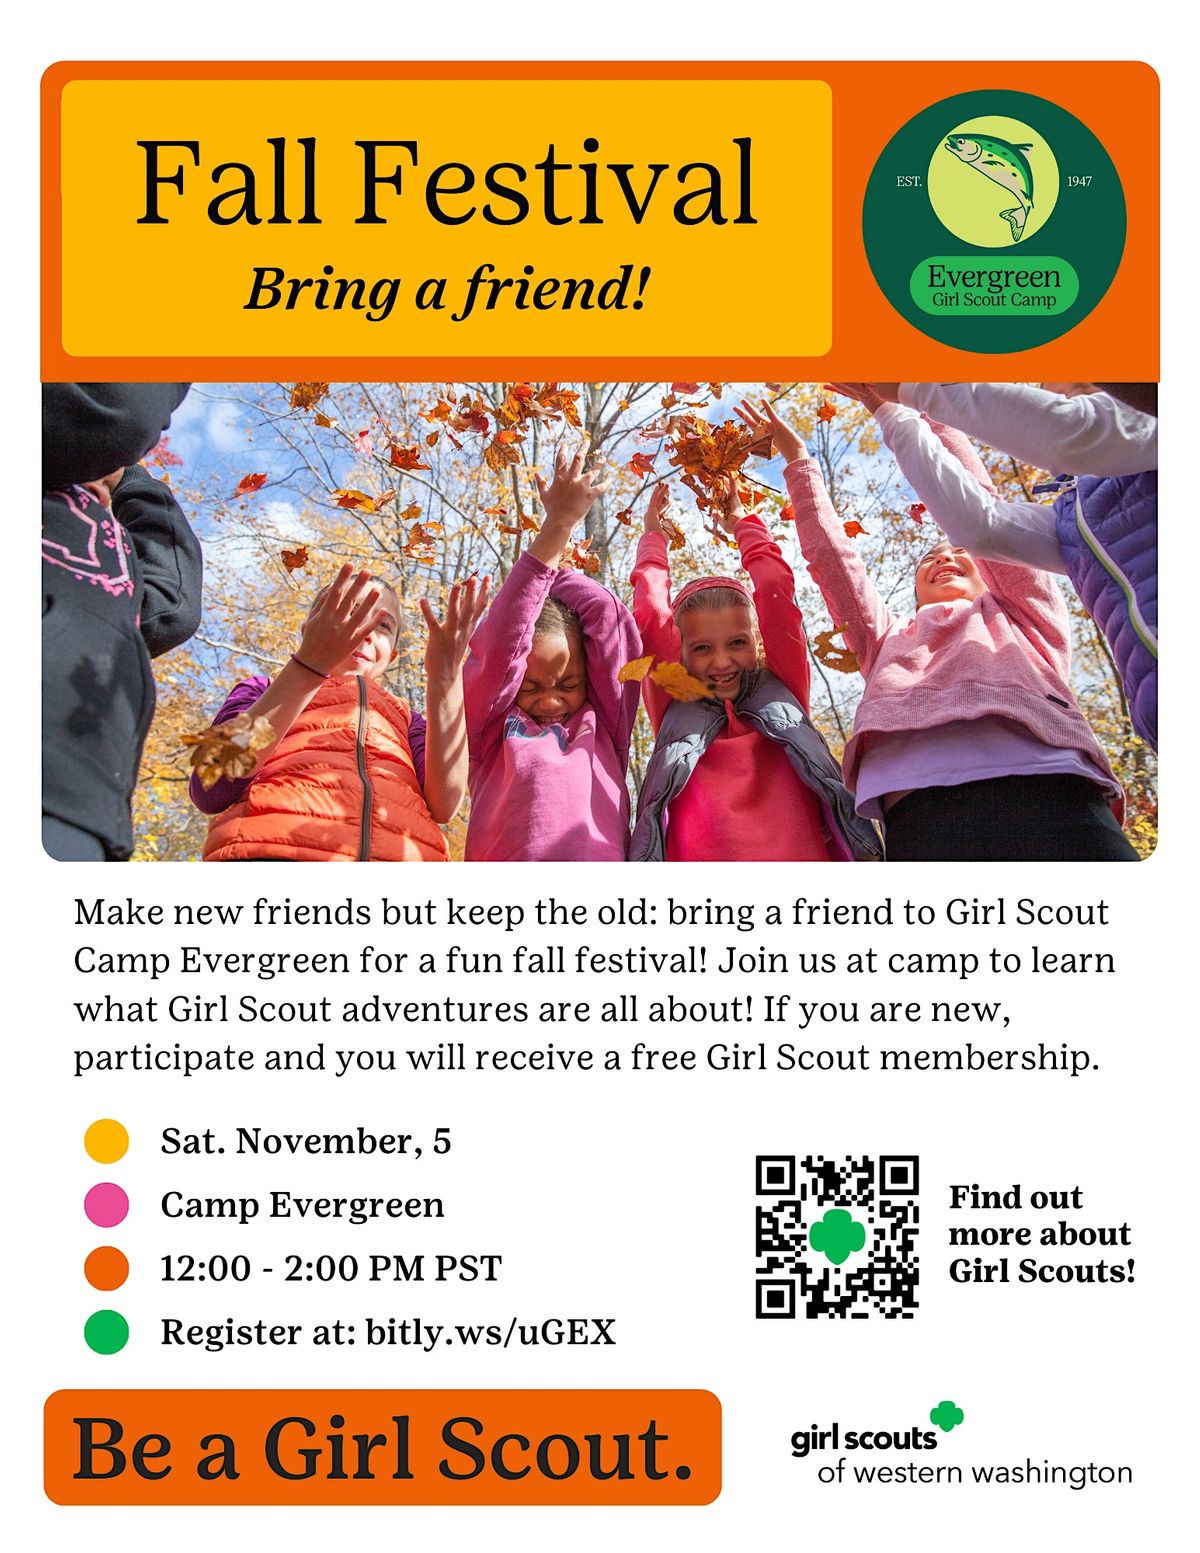 Girl ScoutFall Festival Bring a Friend Evergreen Girl Scout Camp